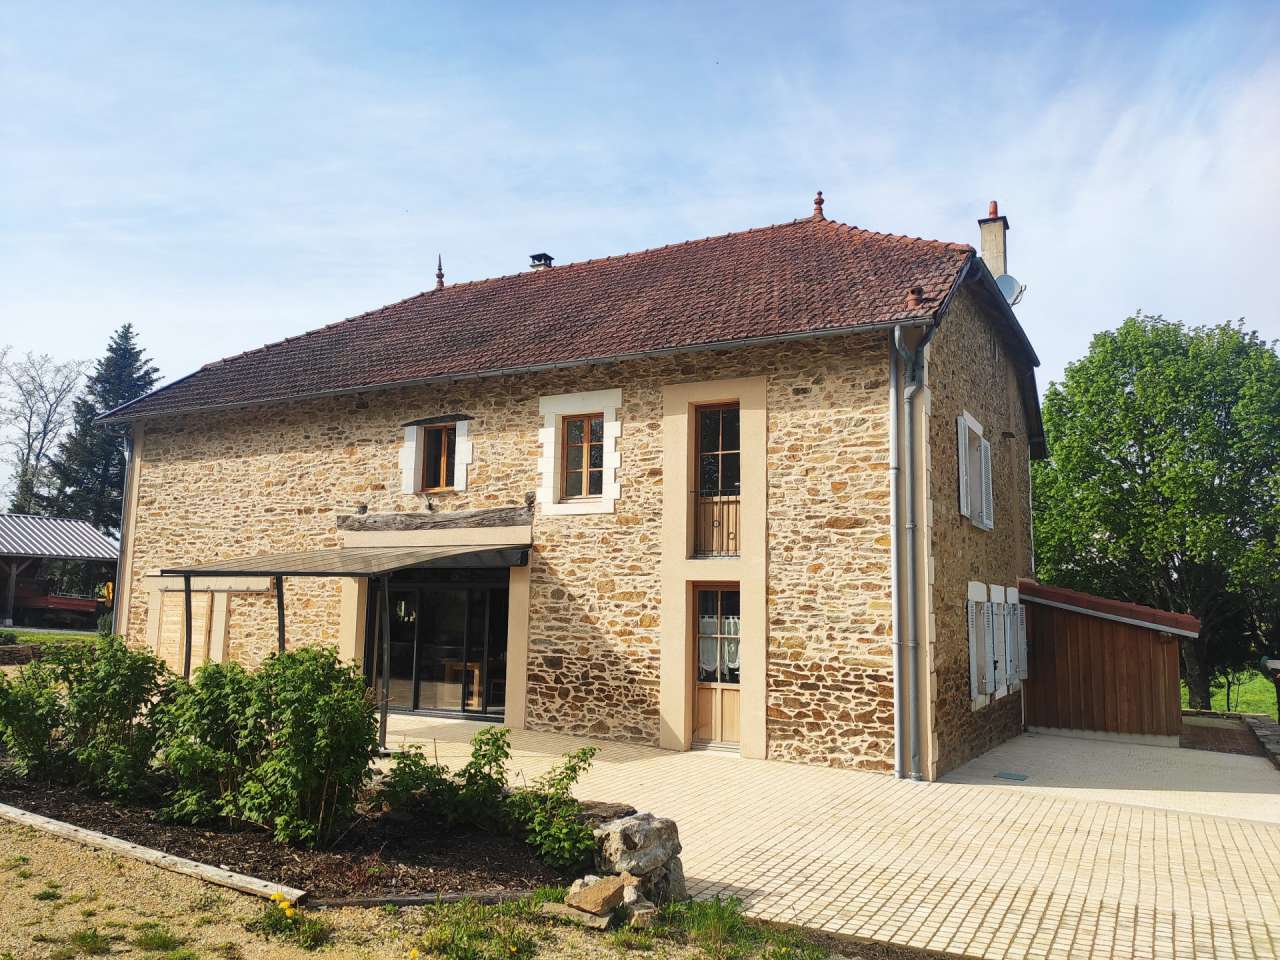 Dordogne character house for sale for under £380k